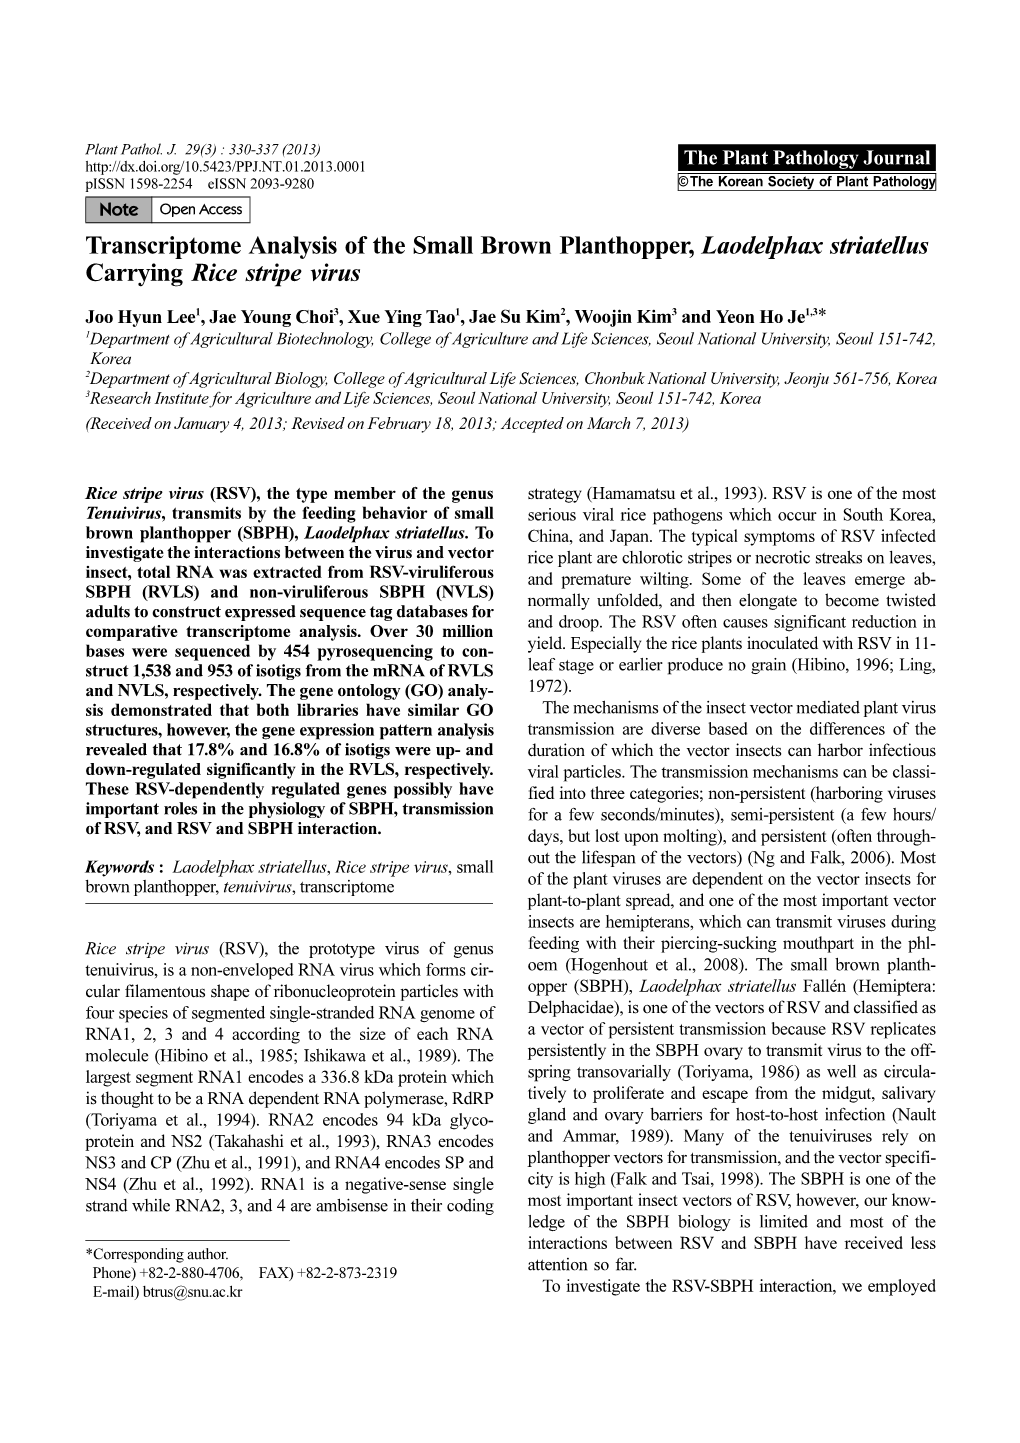 Transcriptome Analysis of the Small Brown Planthopper, Laodelphax Striatellus Carrying Rice Stripe Virus